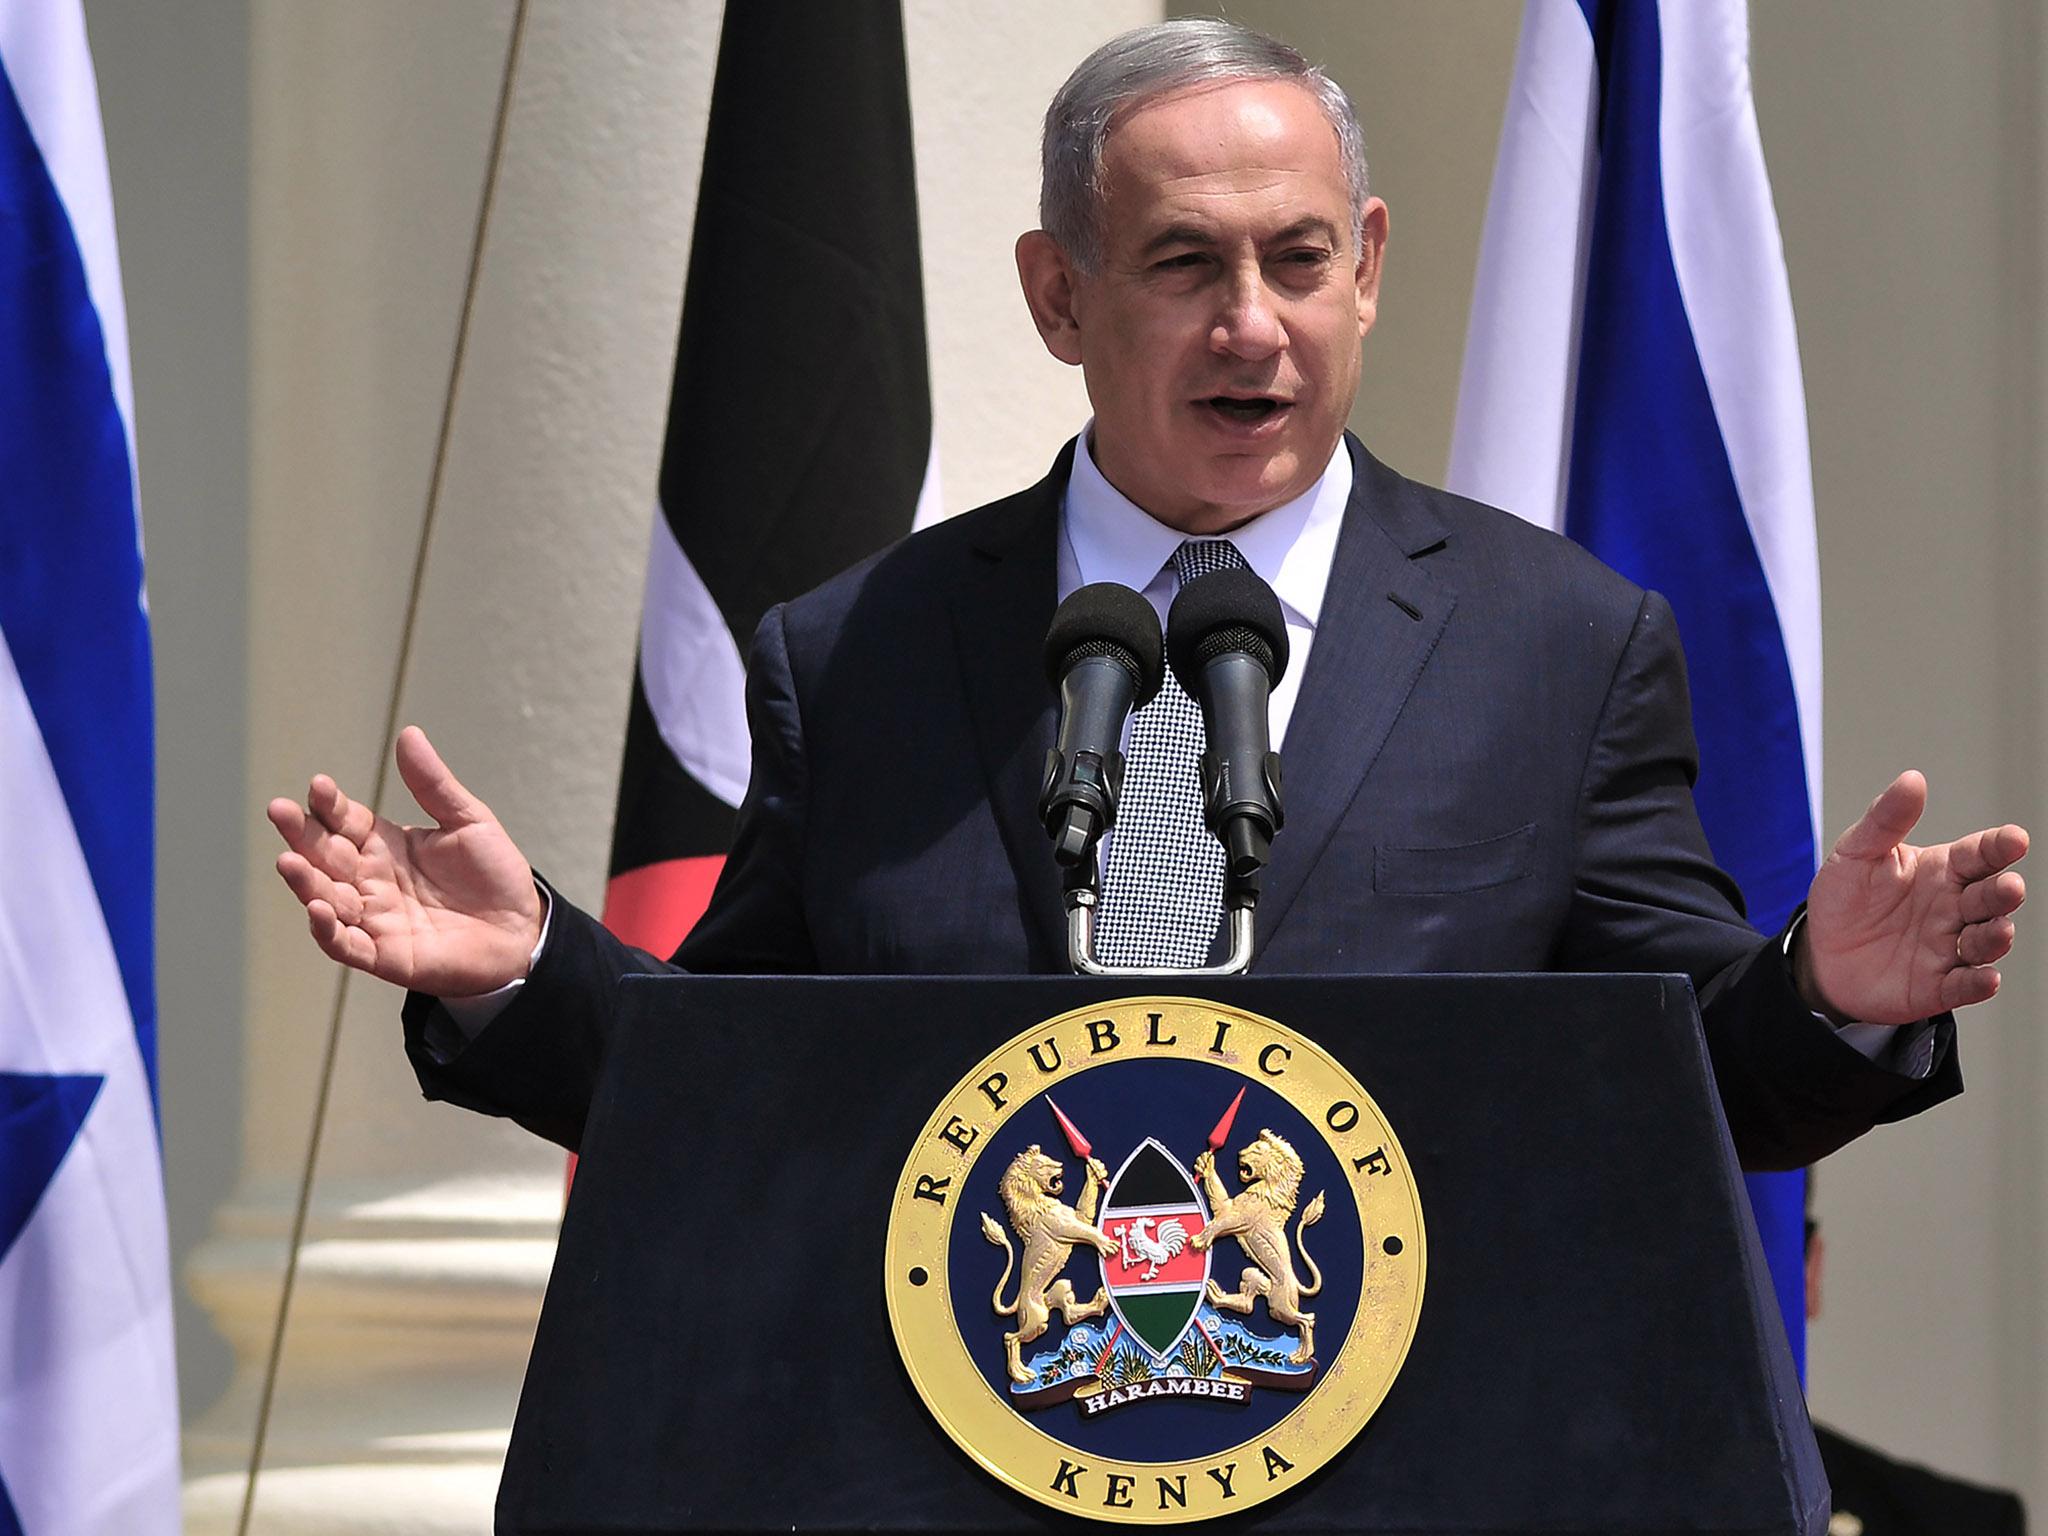 Israeli Prime Minister Benjamin Netanyahu speaking during his visit to Kenya this week